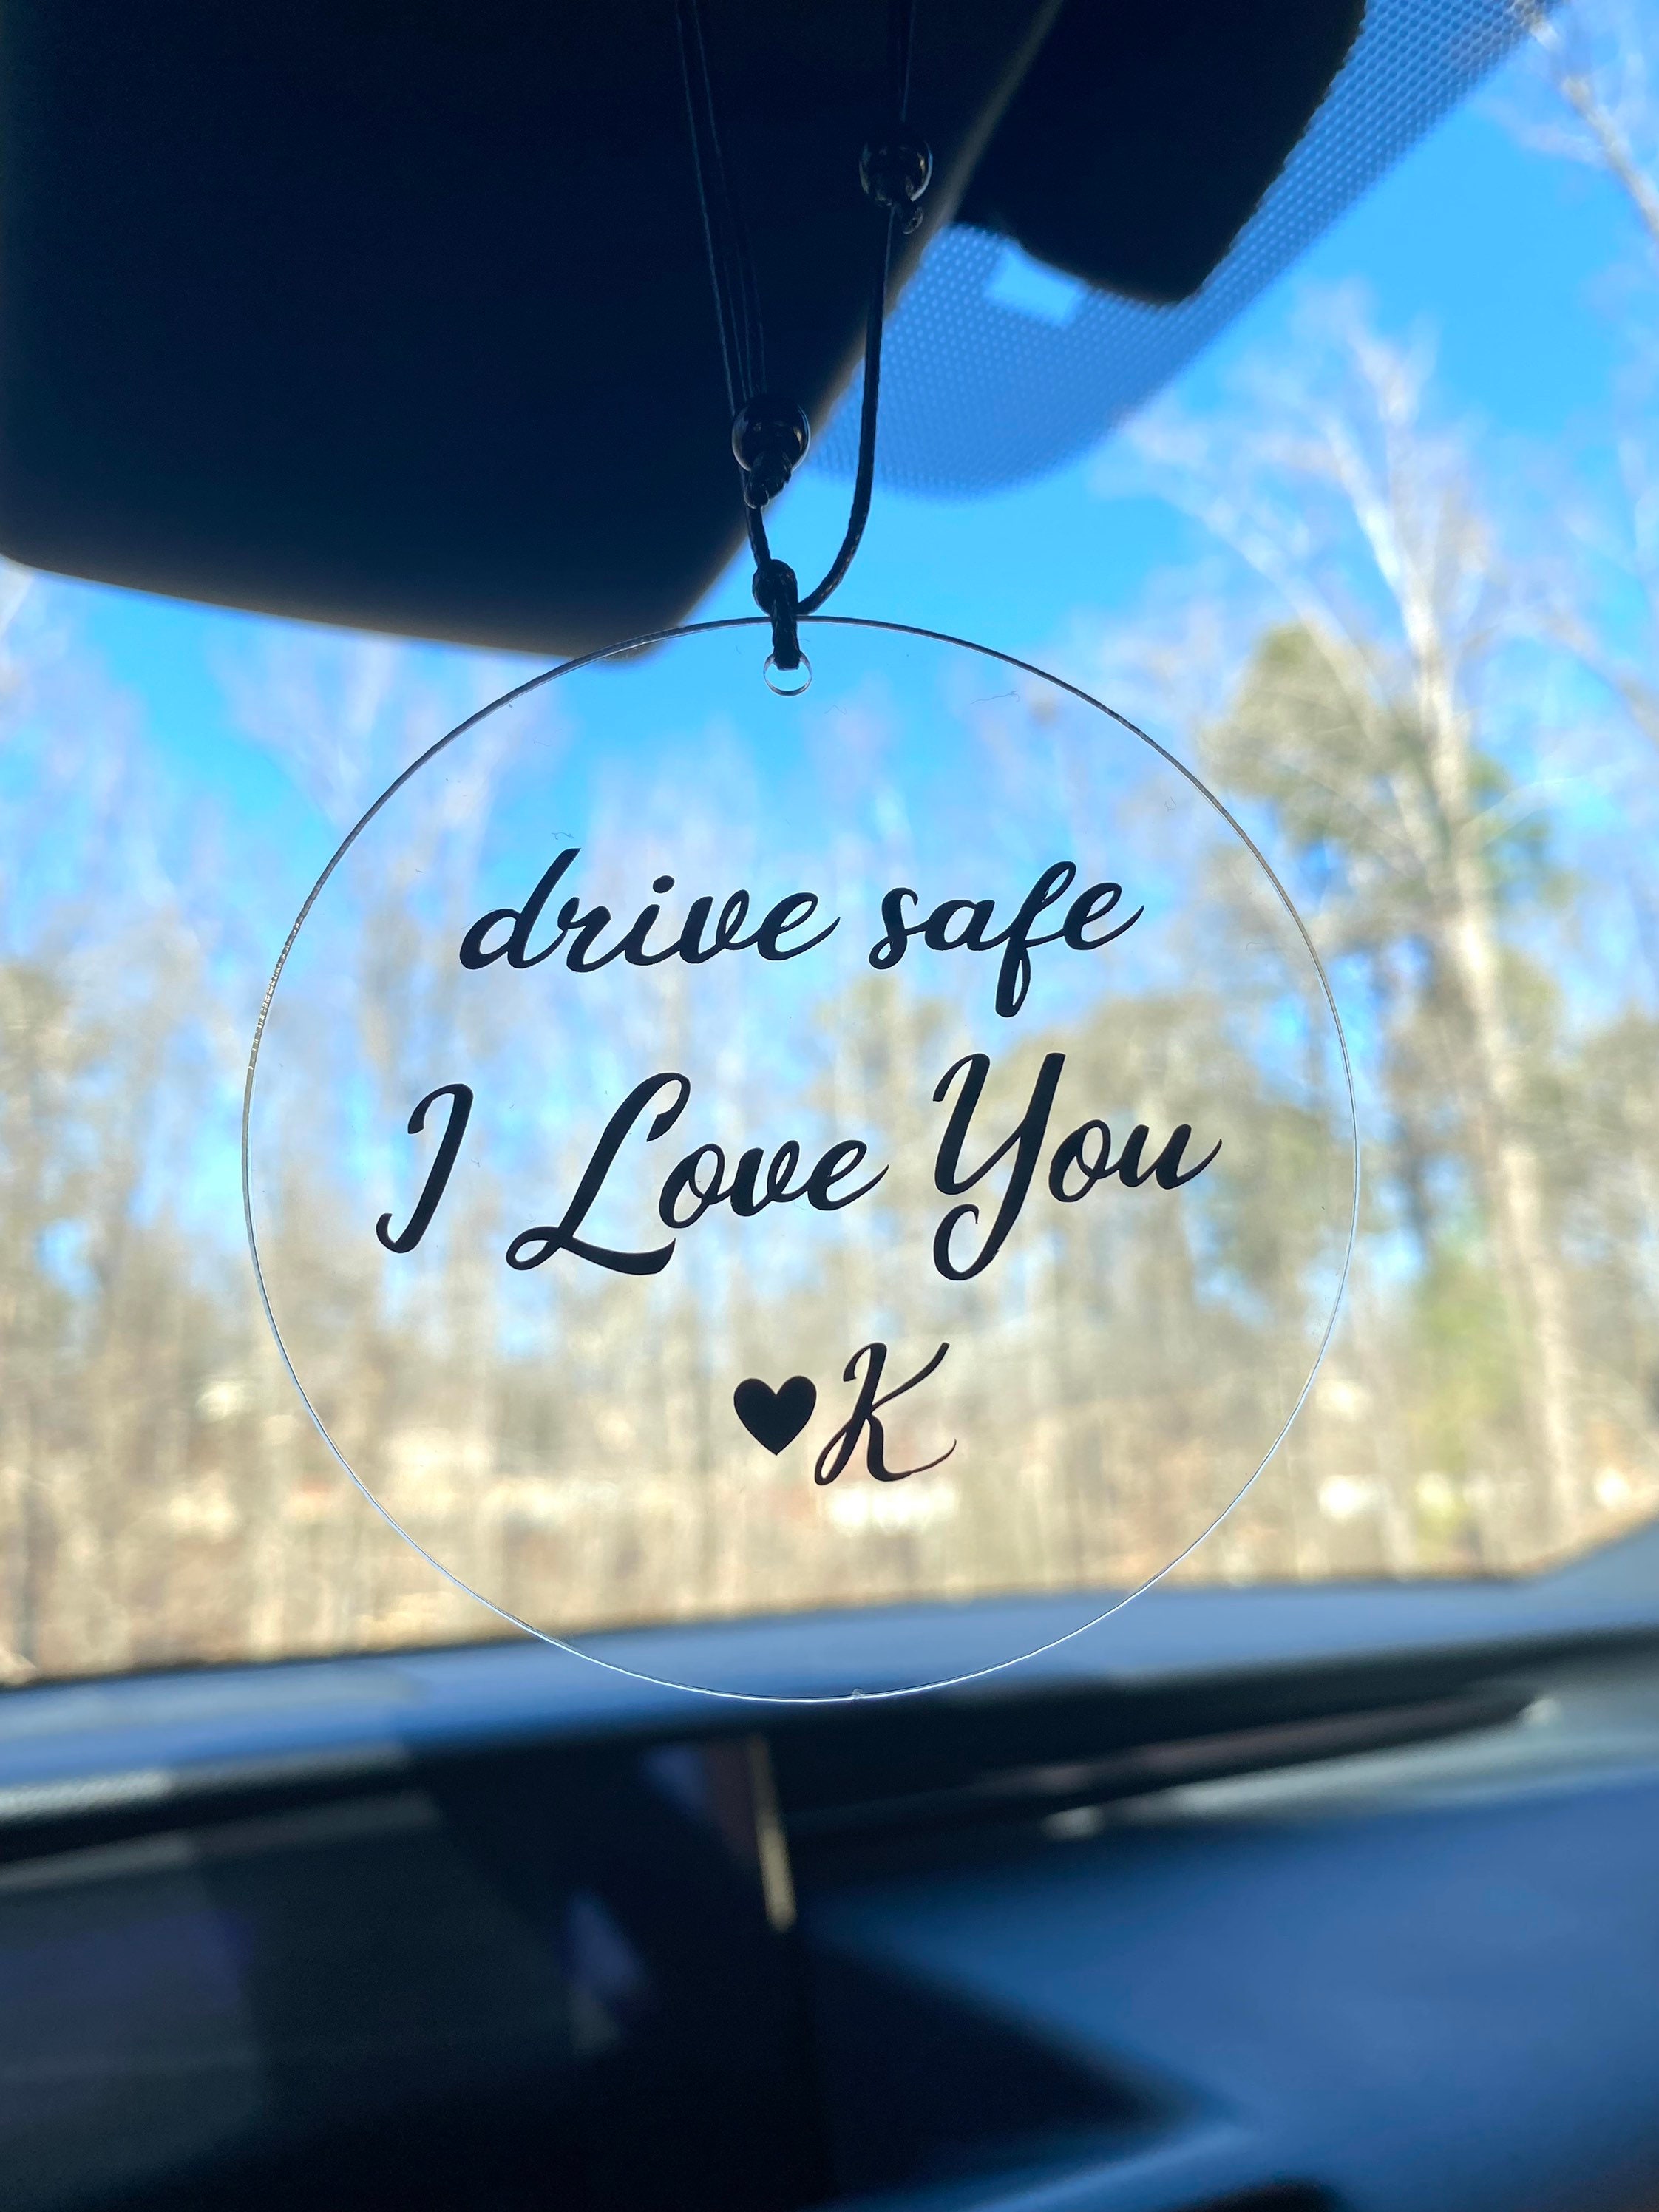 Car Mirror Hanging Crochet Accessories Moon Saturn Love Ornament (Taylor  Swift)